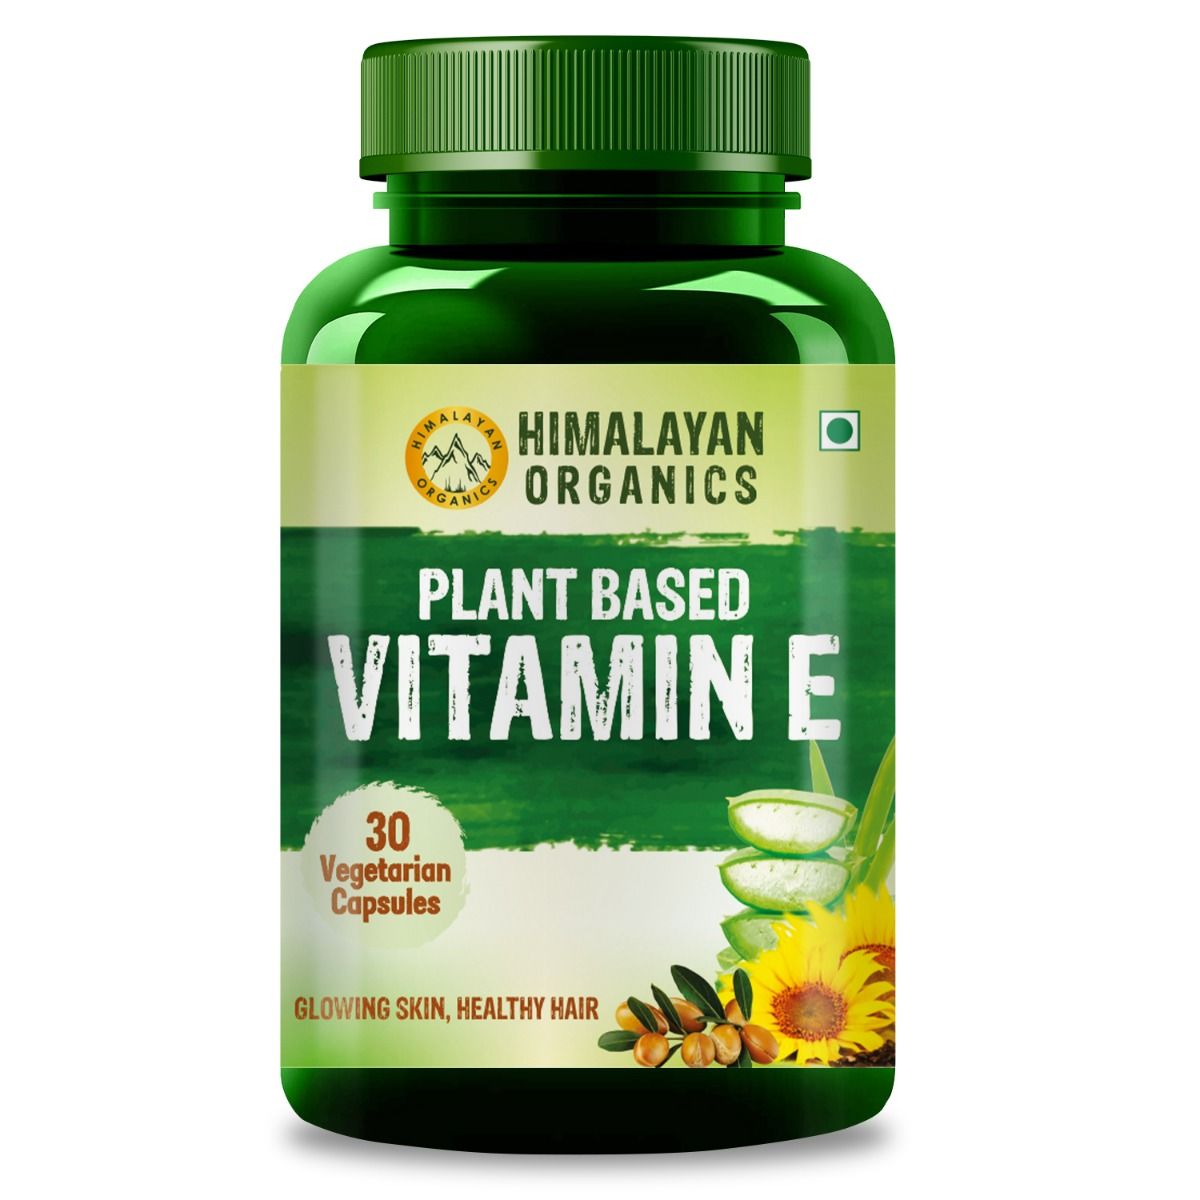 Buy Himalayan Organics Plant Based Vitamin E, 30 Capsules Online